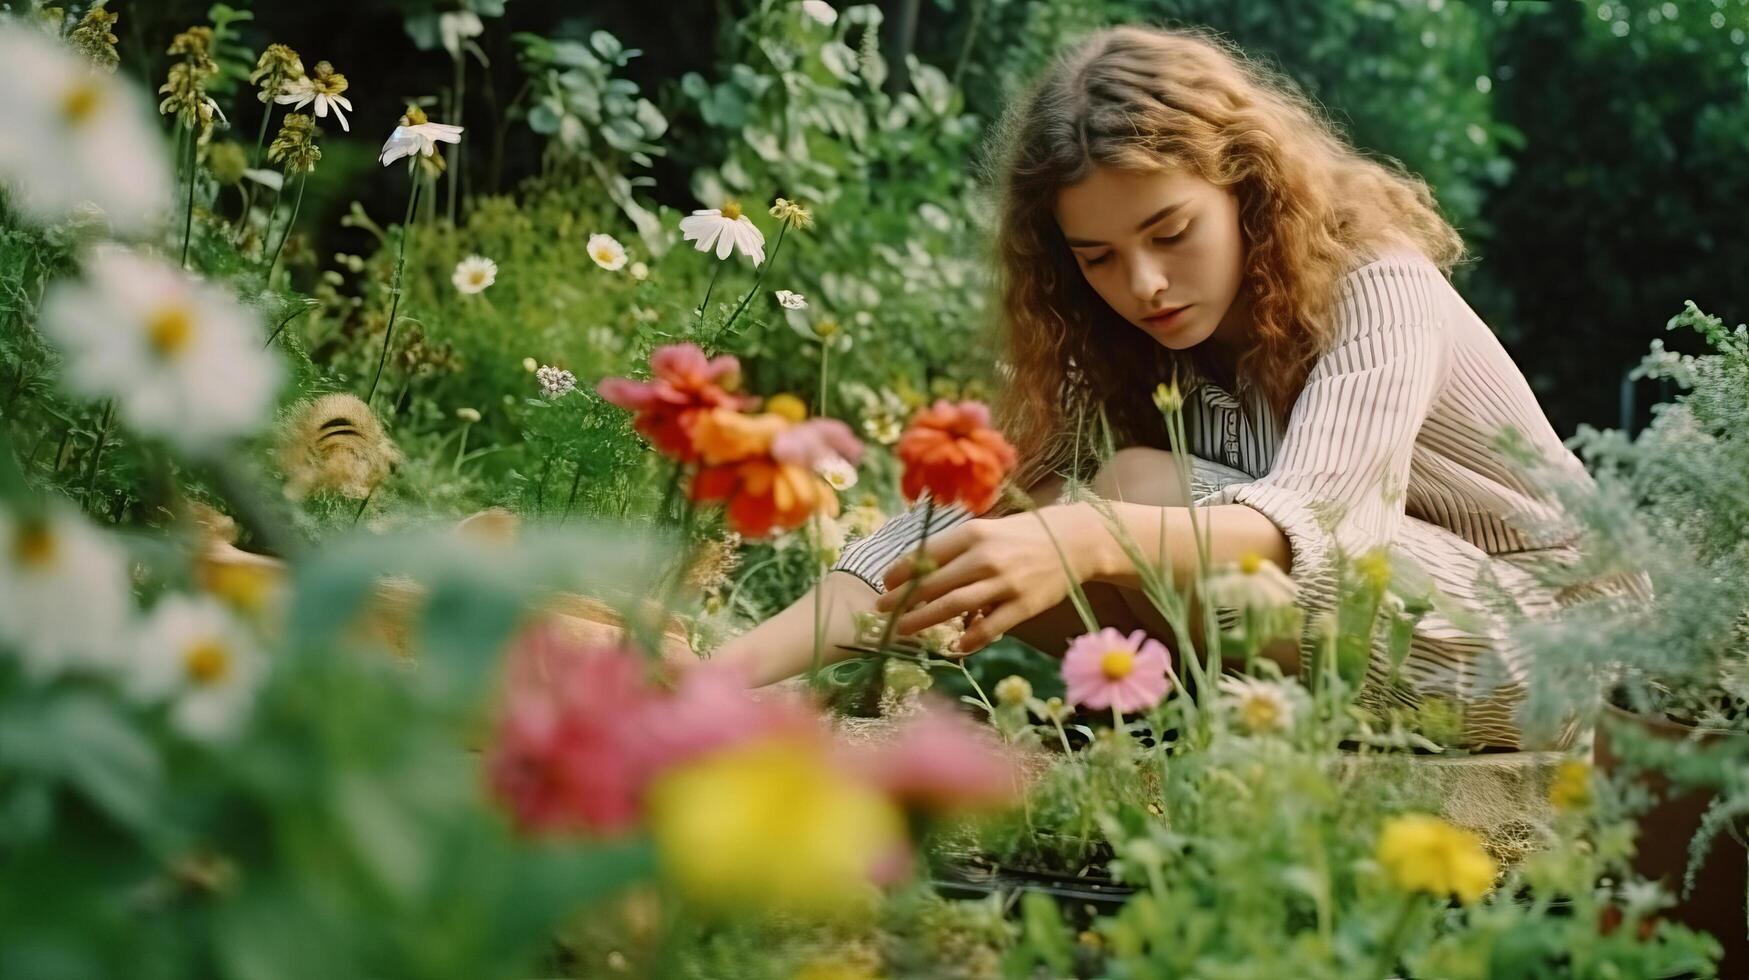 Woman planting flowers in garden. Illustration photo